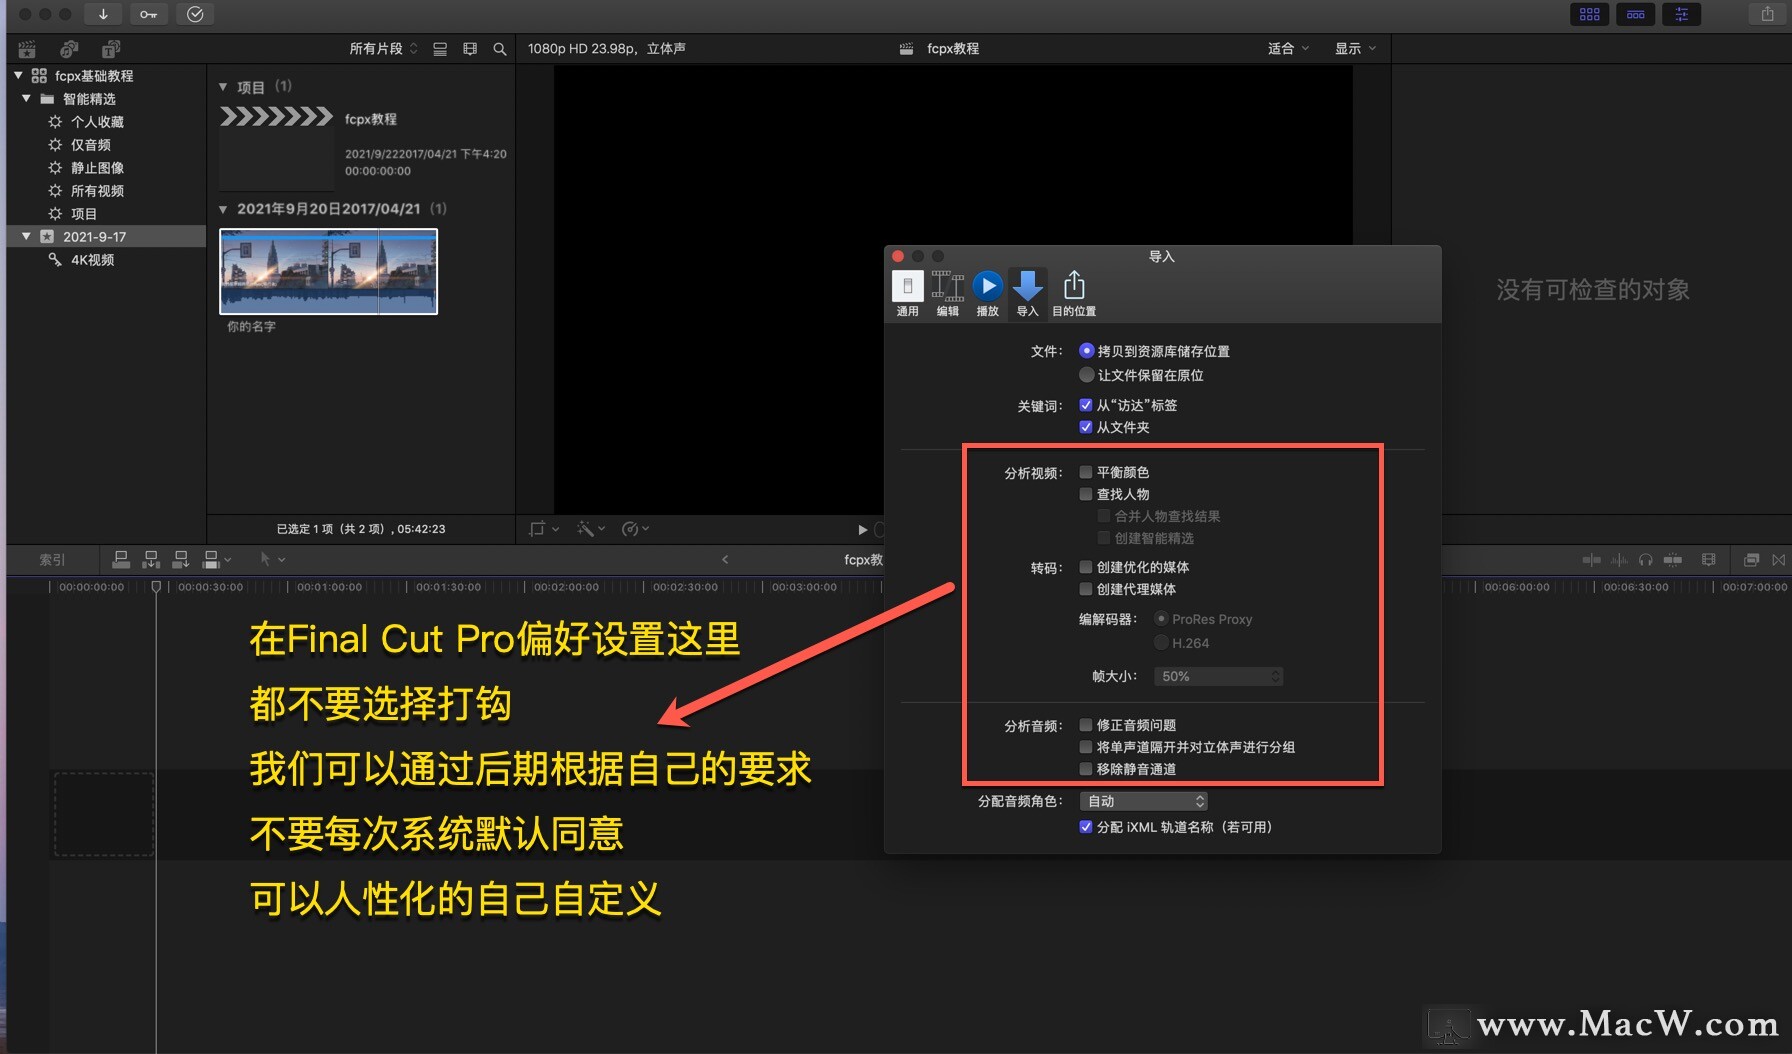 Final Cut Pro中文教程 (6) 如何导入素材 - 图27